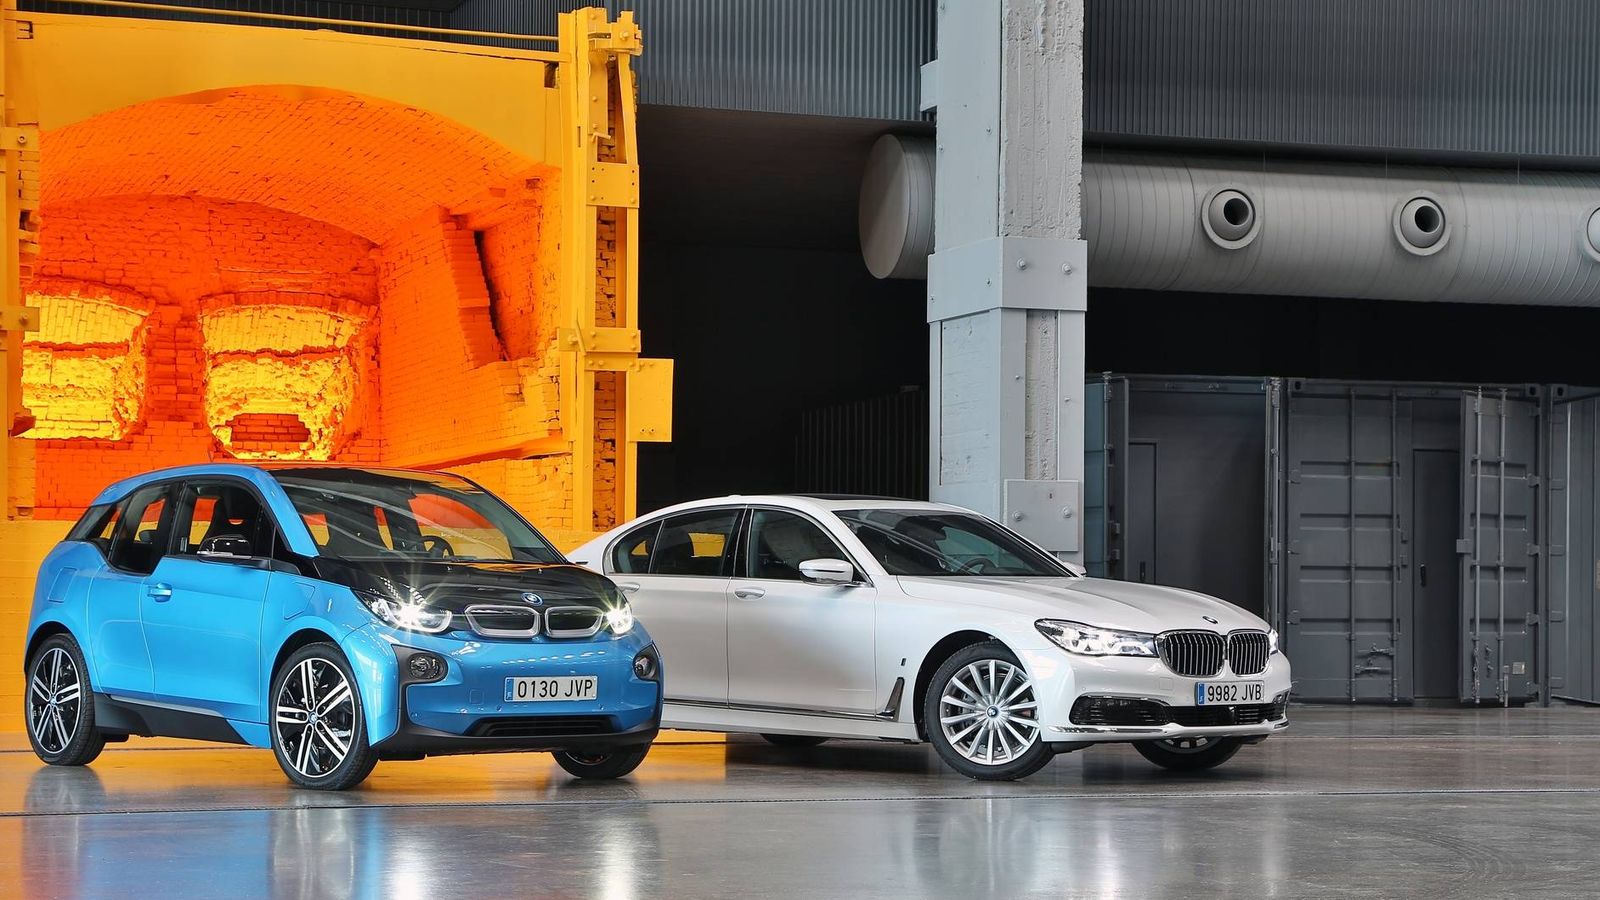 Foto: BMW Innovation Days, el futuro del automóvil 